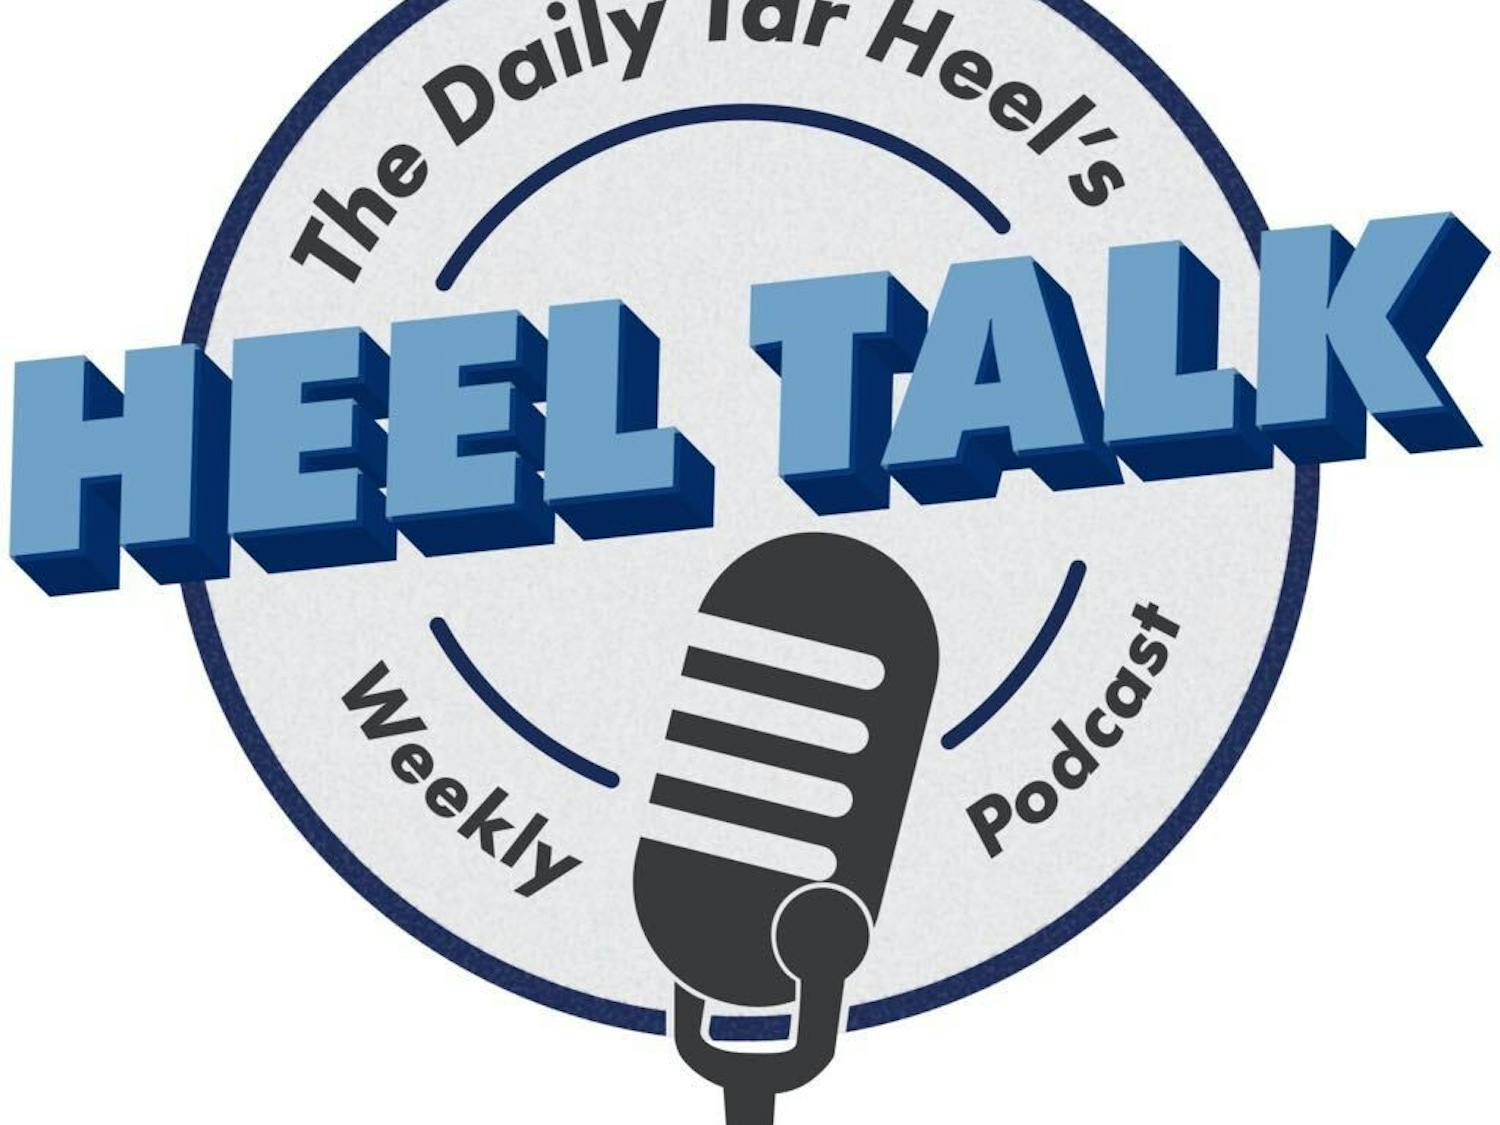 Heel-talk-column-0414